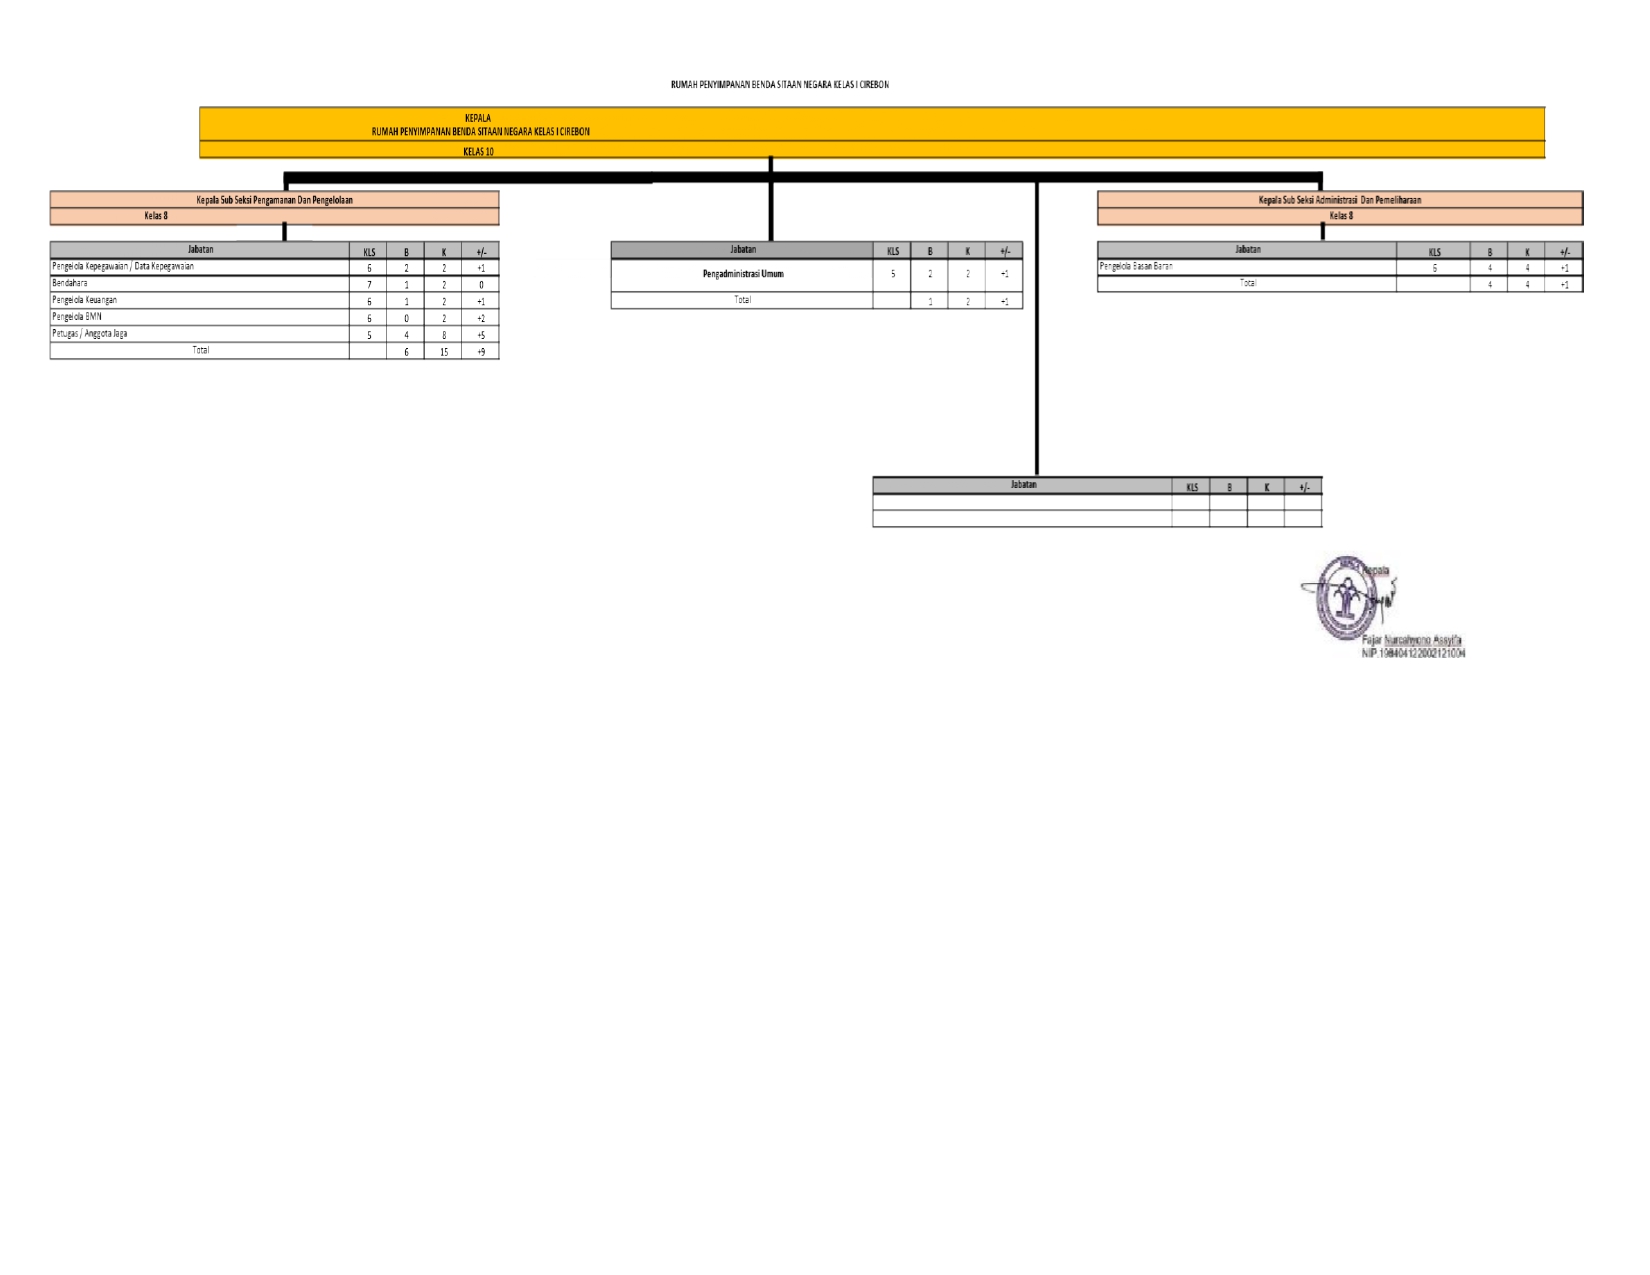 Struktur Organisasi page 0001